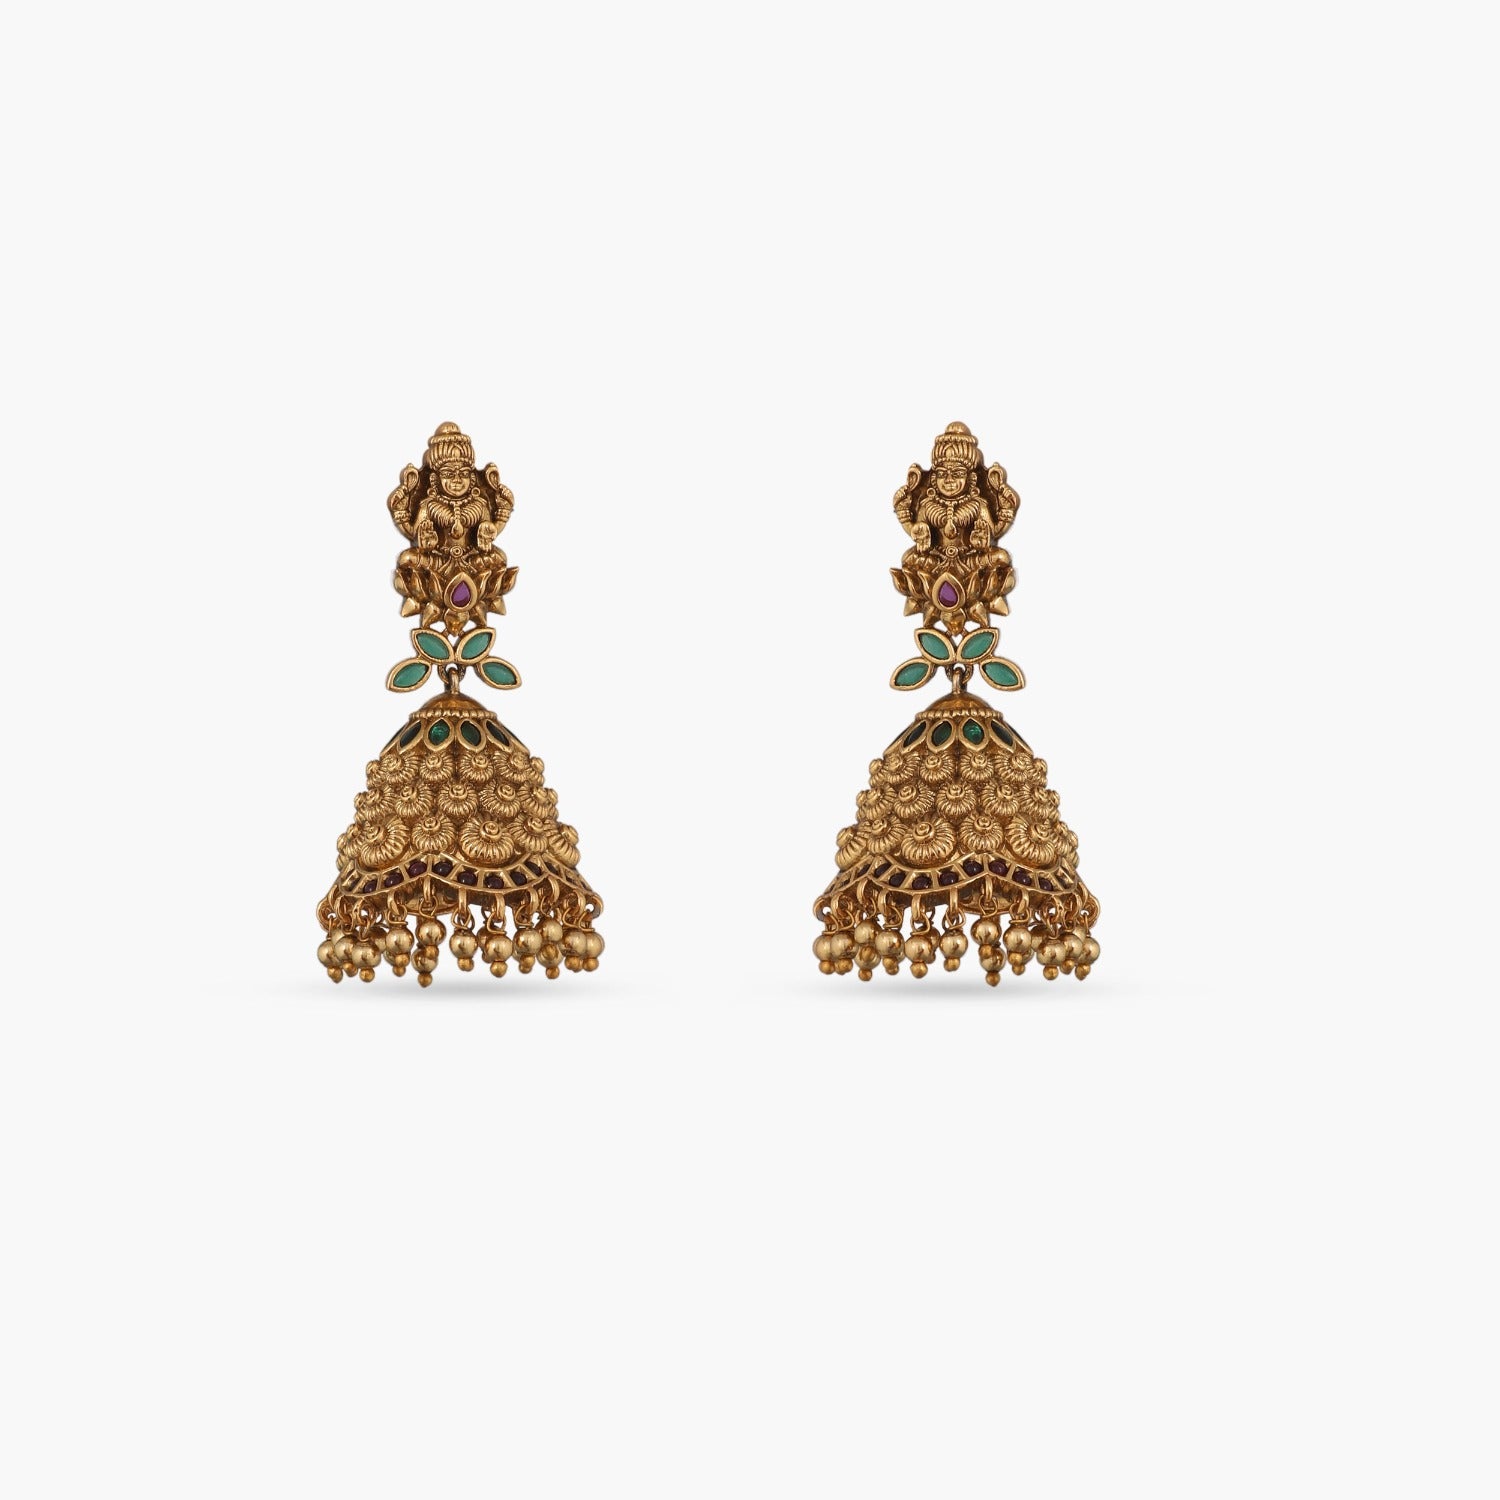 Buy Distinctive Floral Gold Earrings |GRT Jewellers